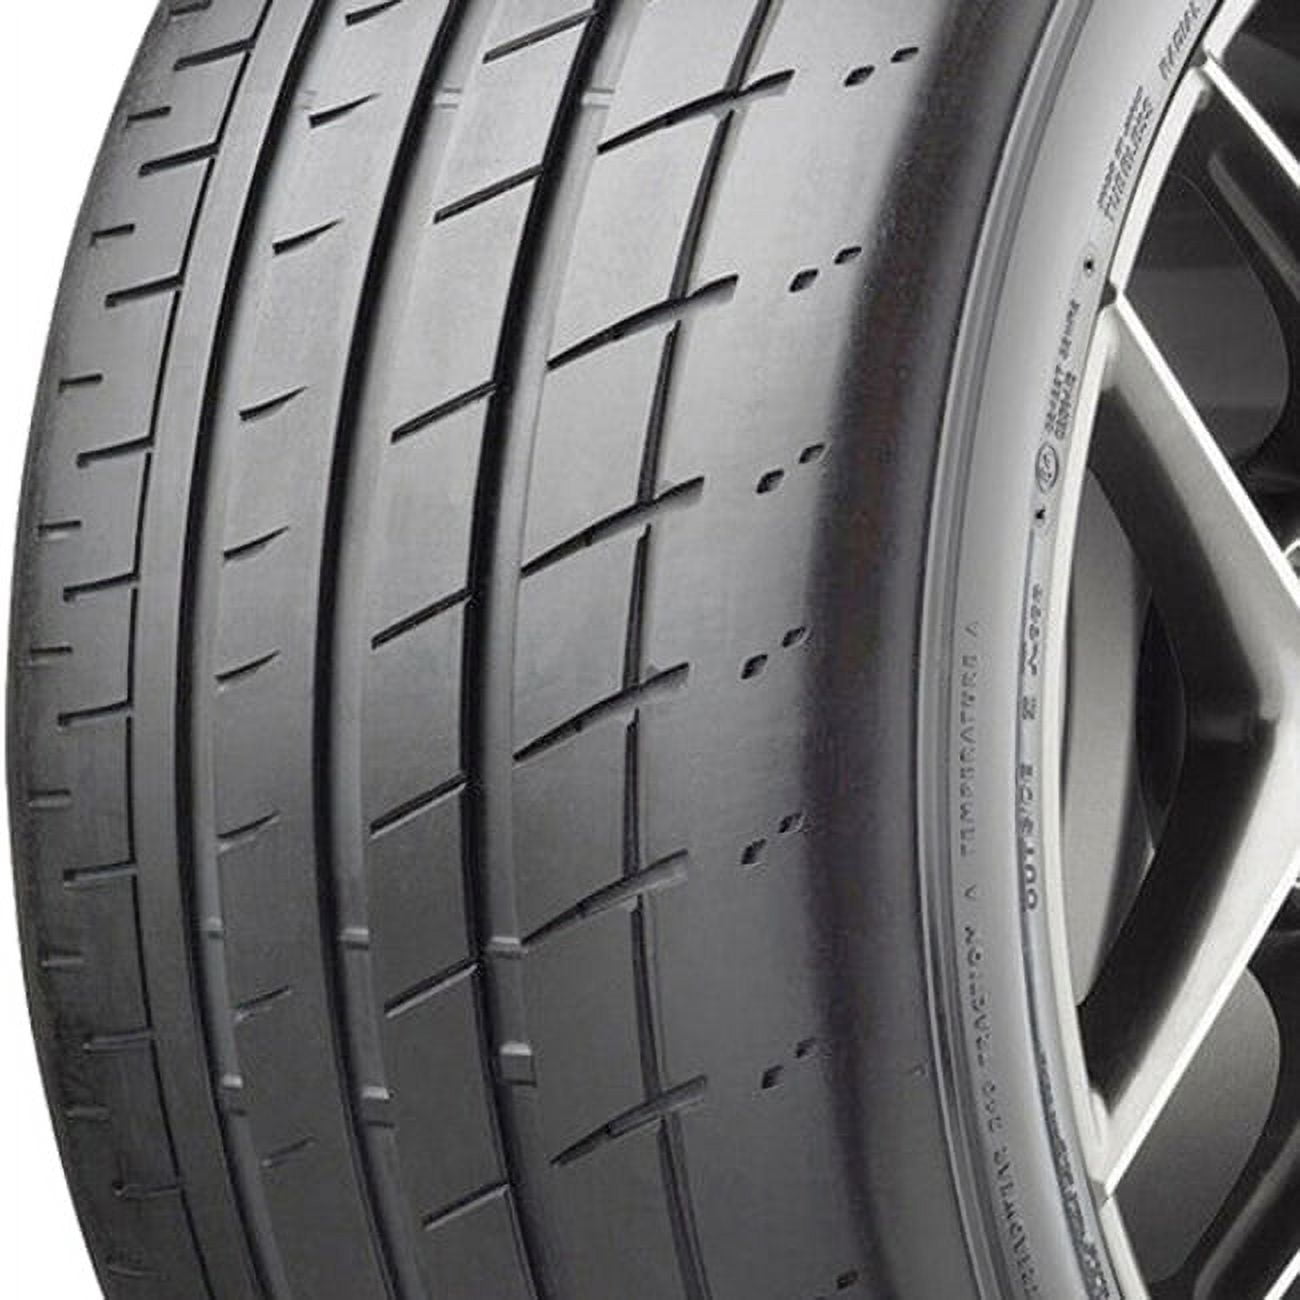 Bridgestone Potenza S007 255/40ZR20 101Y XL (A5A) High Performance Tire